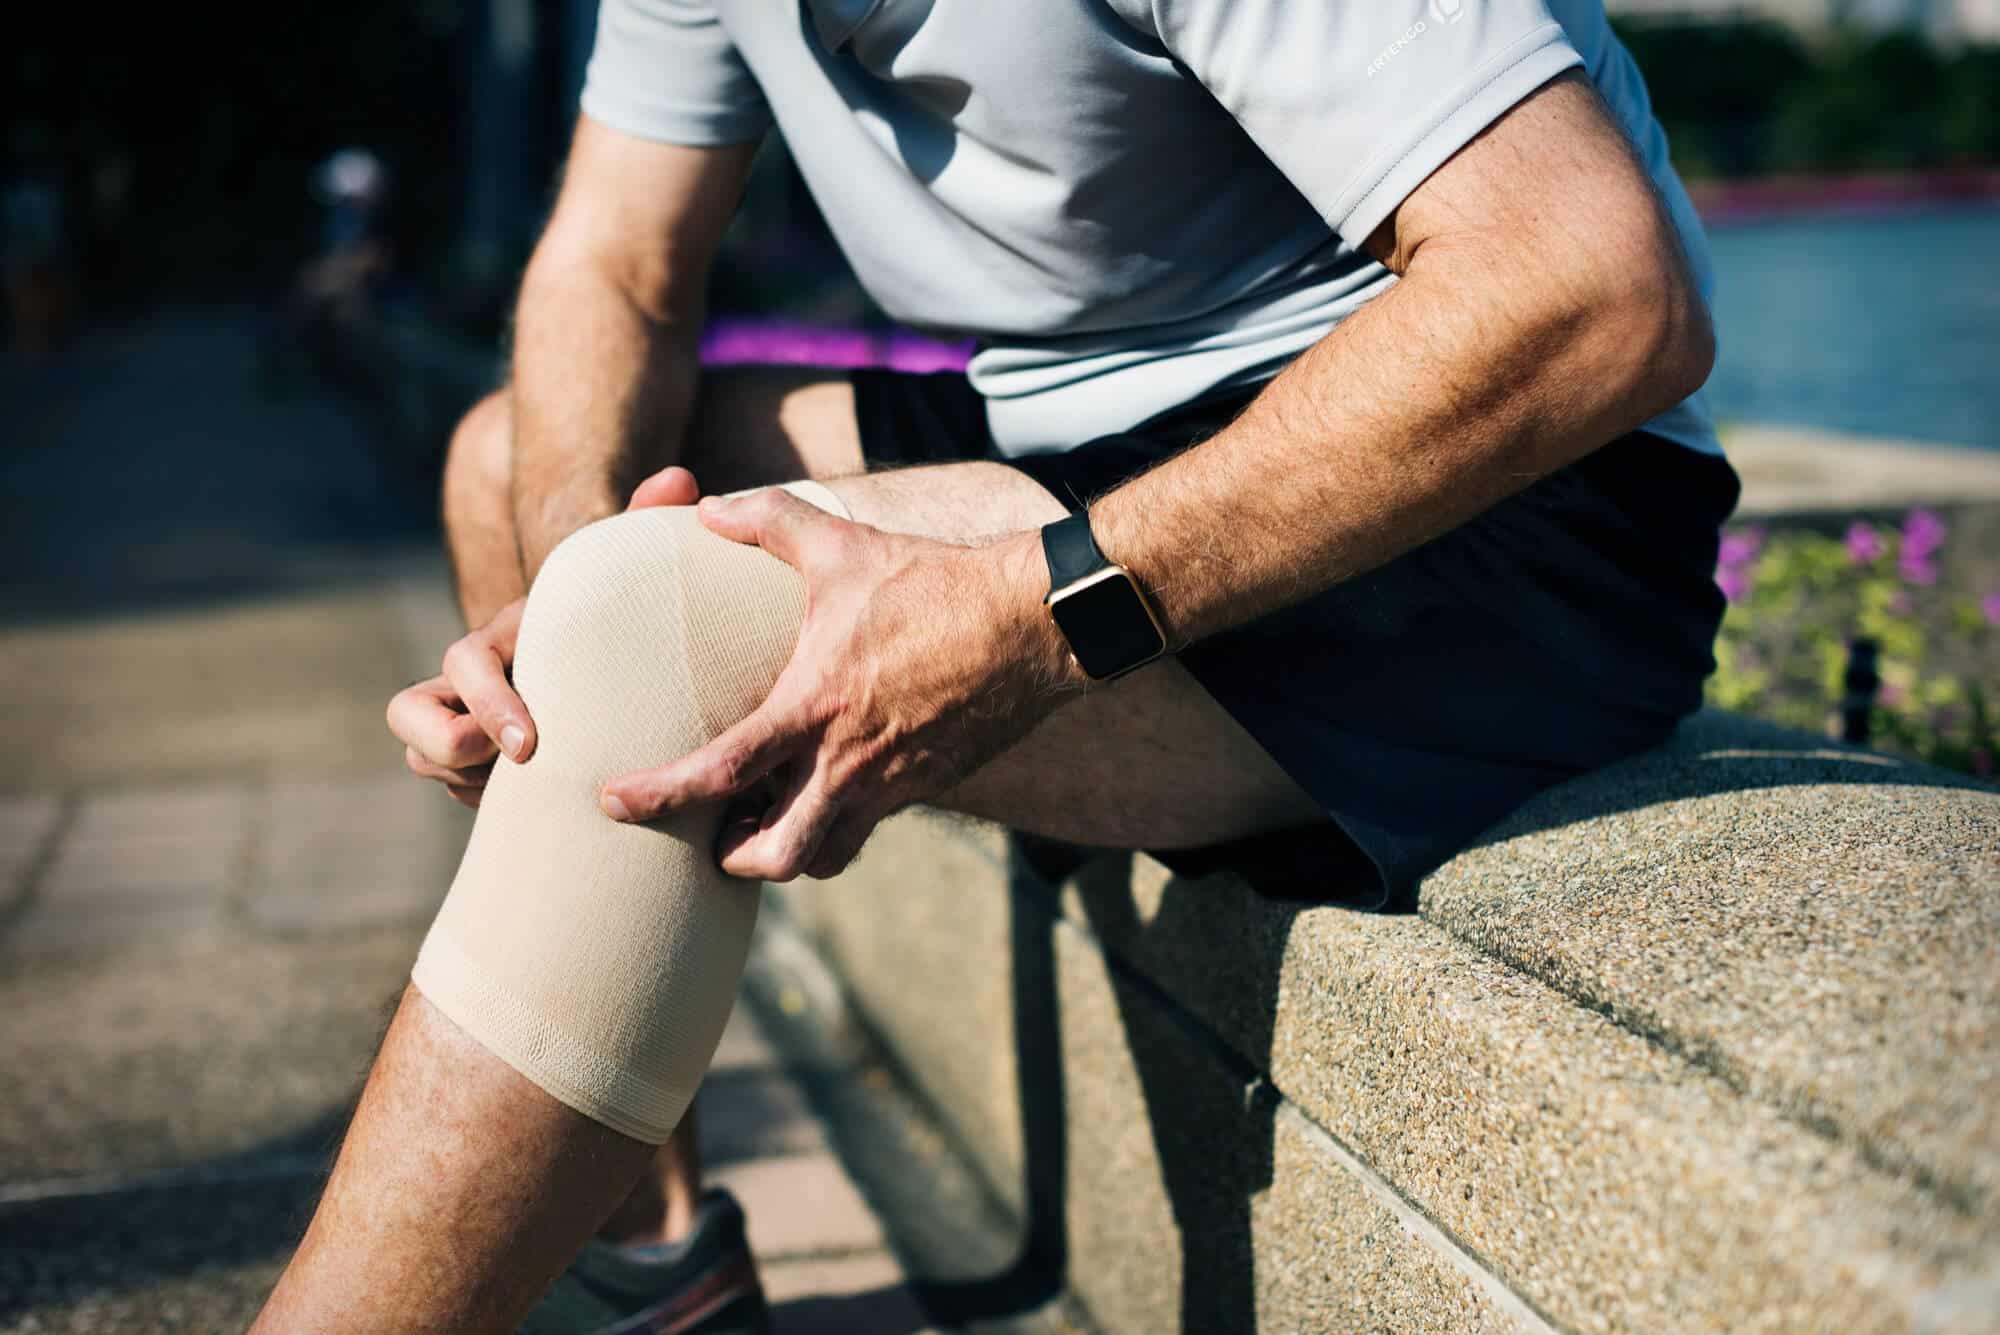 Men having knee pain image